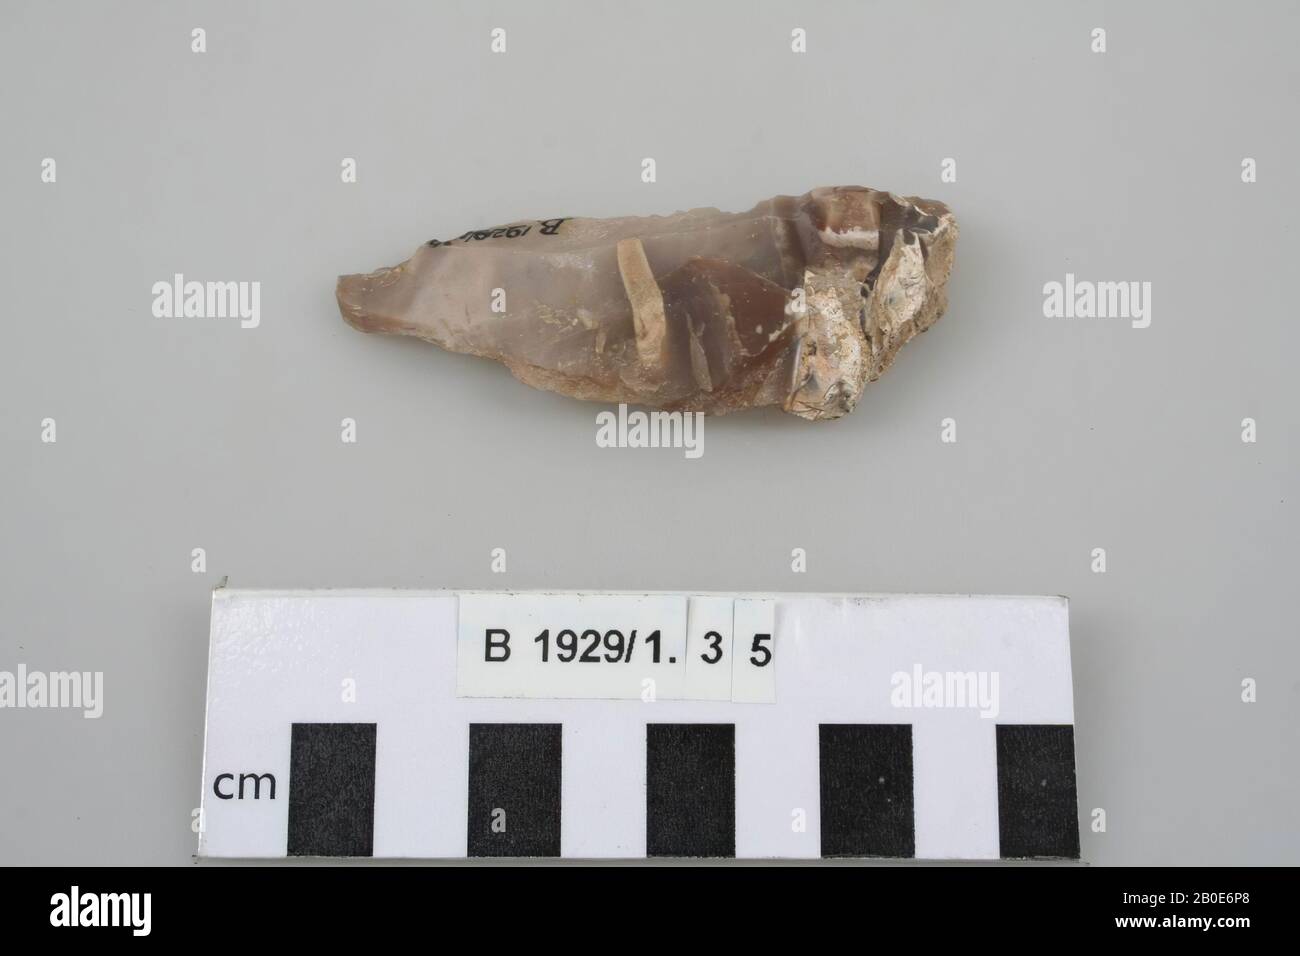 Ancient Near East, tool, stone, flint, L 7.6 cm, Location, Palestine Stock Photo